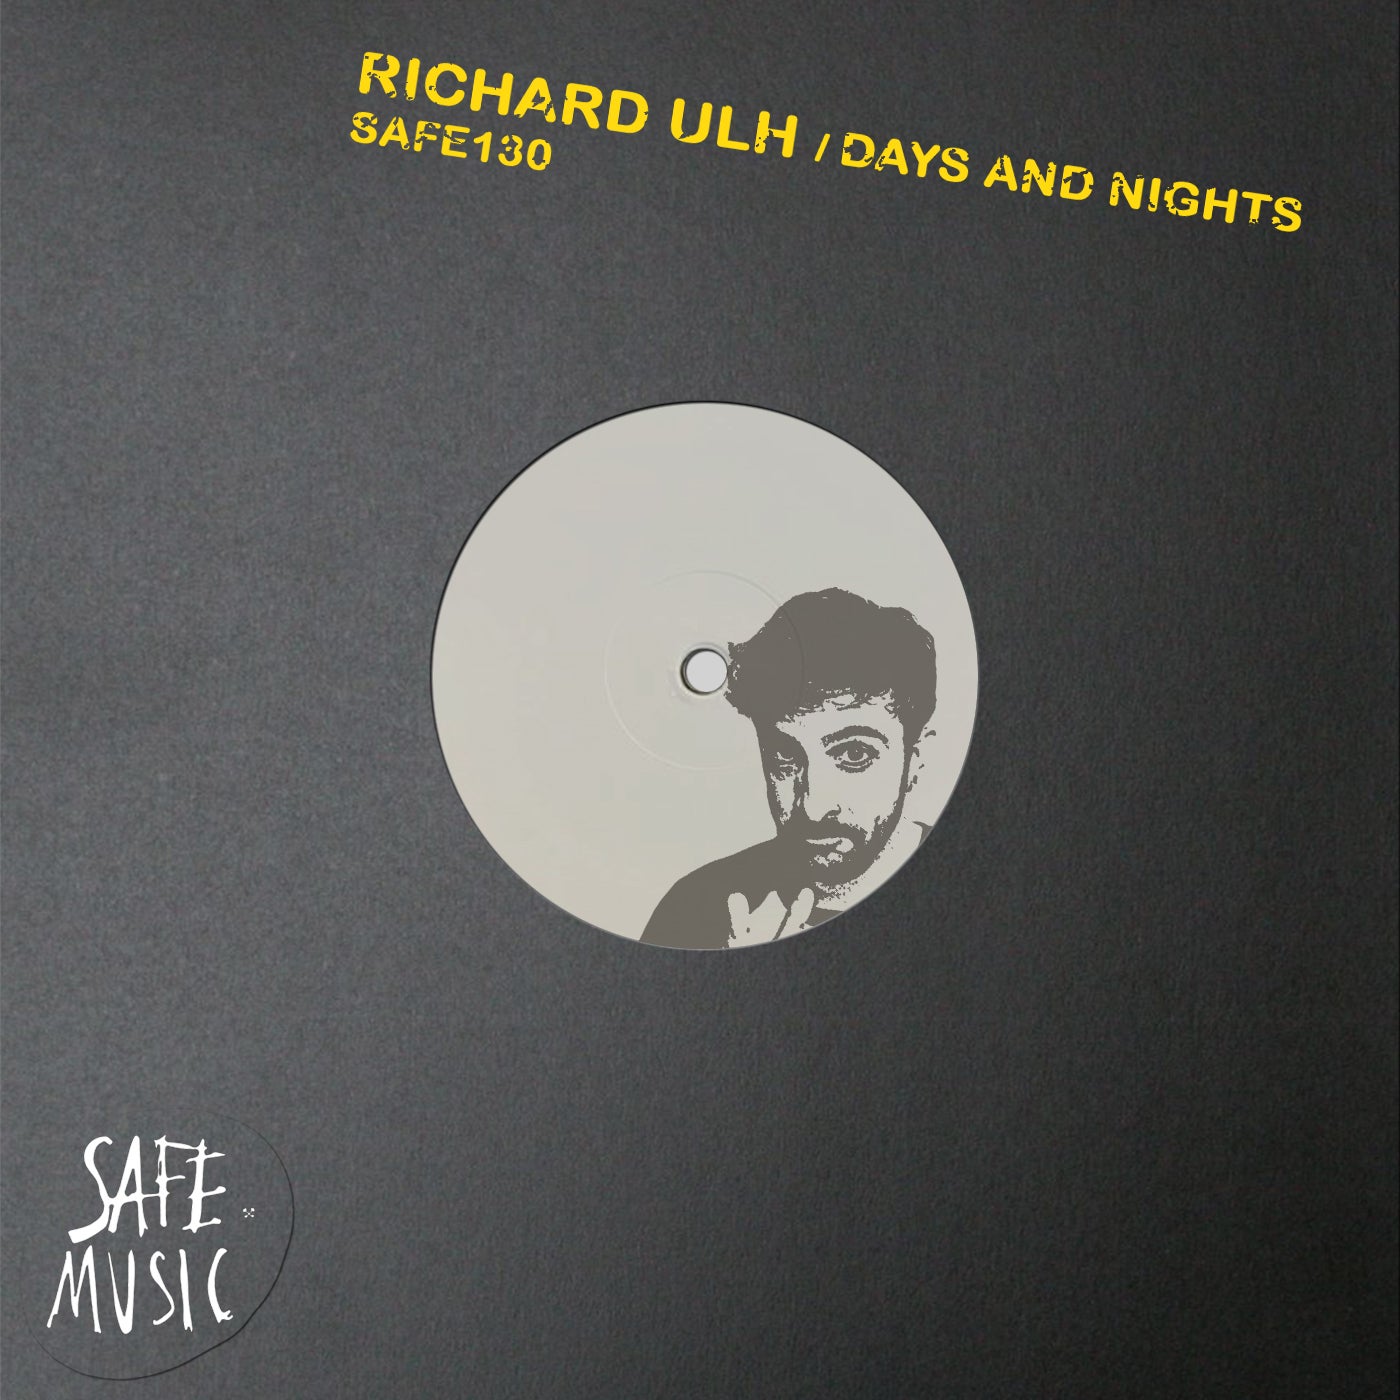 Download Richard Ulh - Days & Nights EP on Electrobuzz